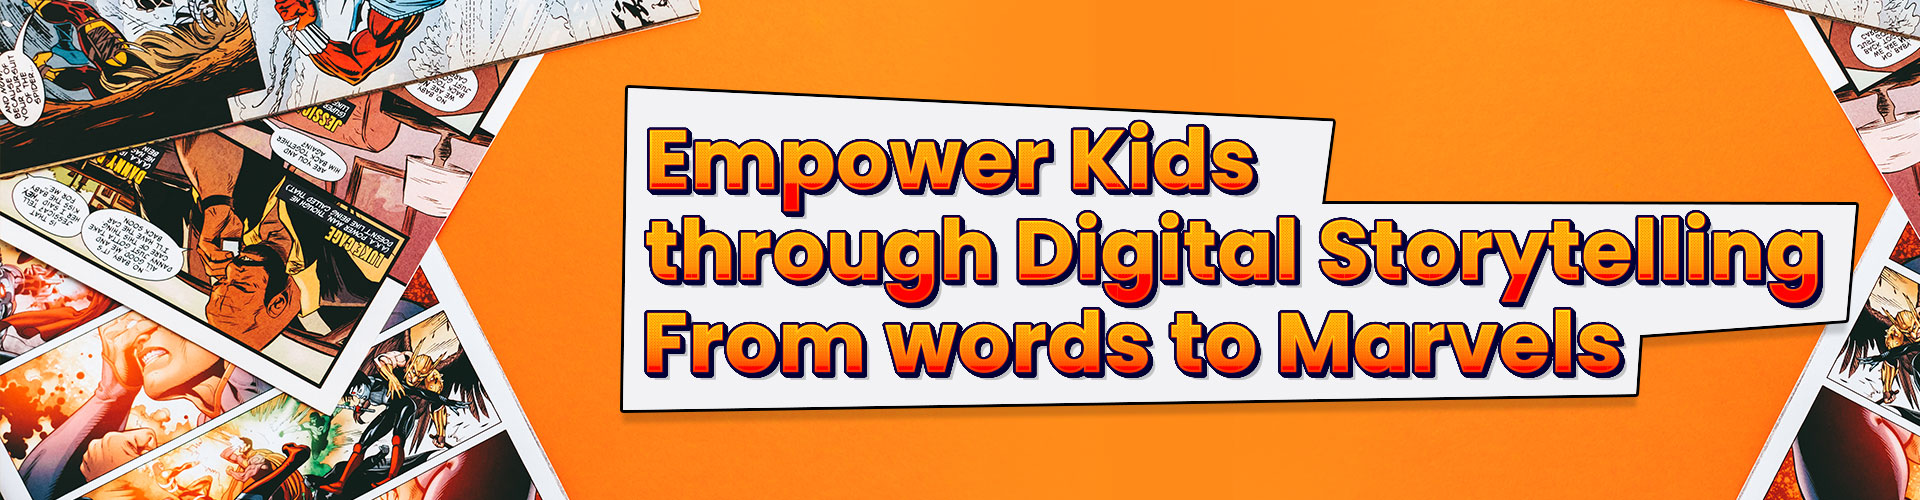 Empower Kids through Digital Storytelling